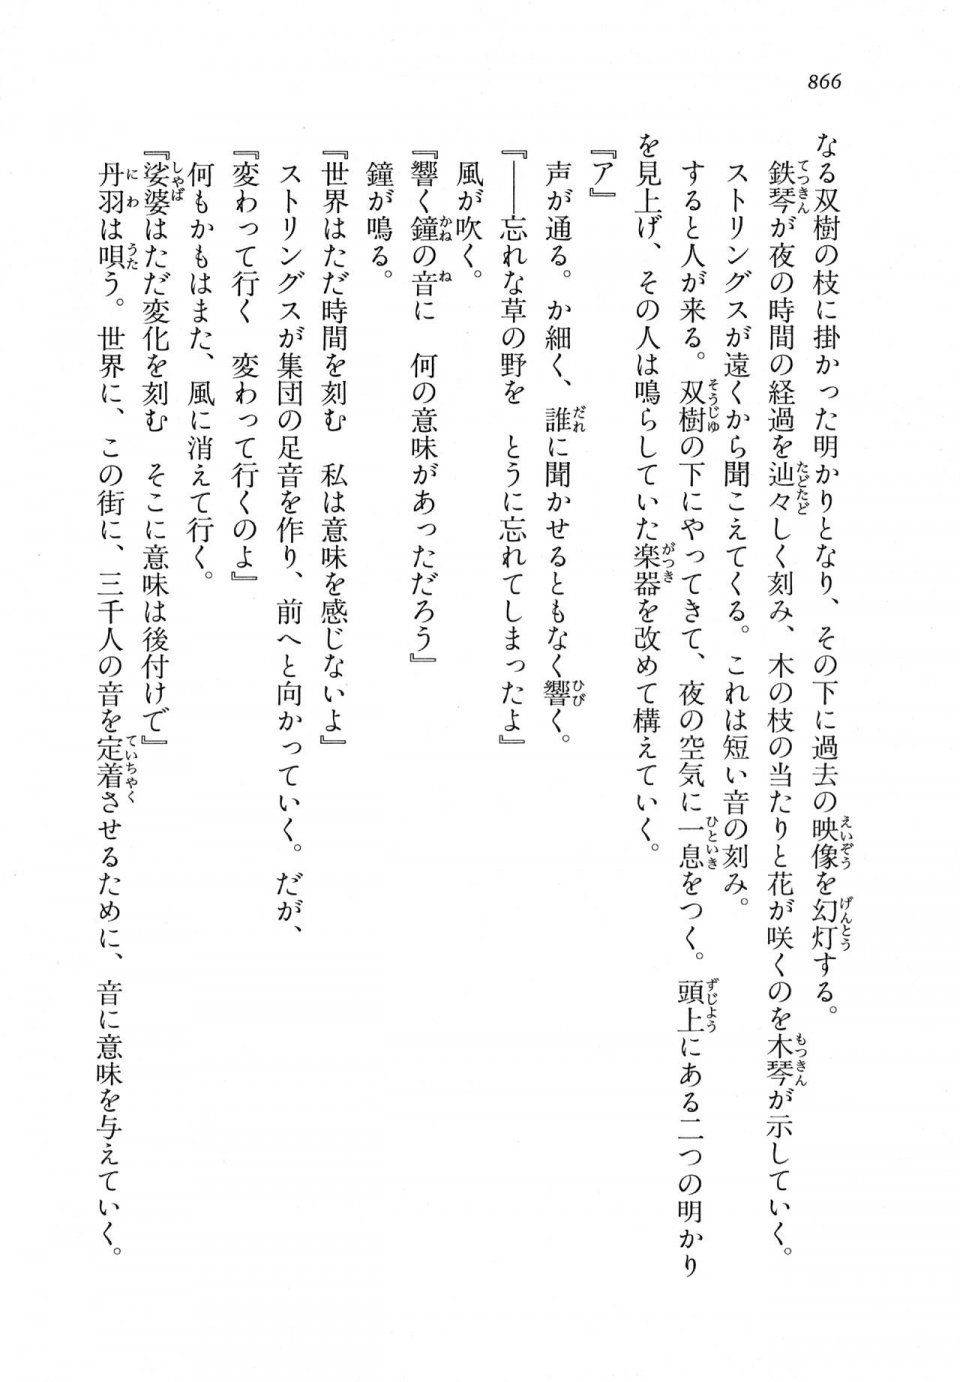 Kyoukai Senjou no Horizon LN Vol 18(7C) Part 2 - Photo #306